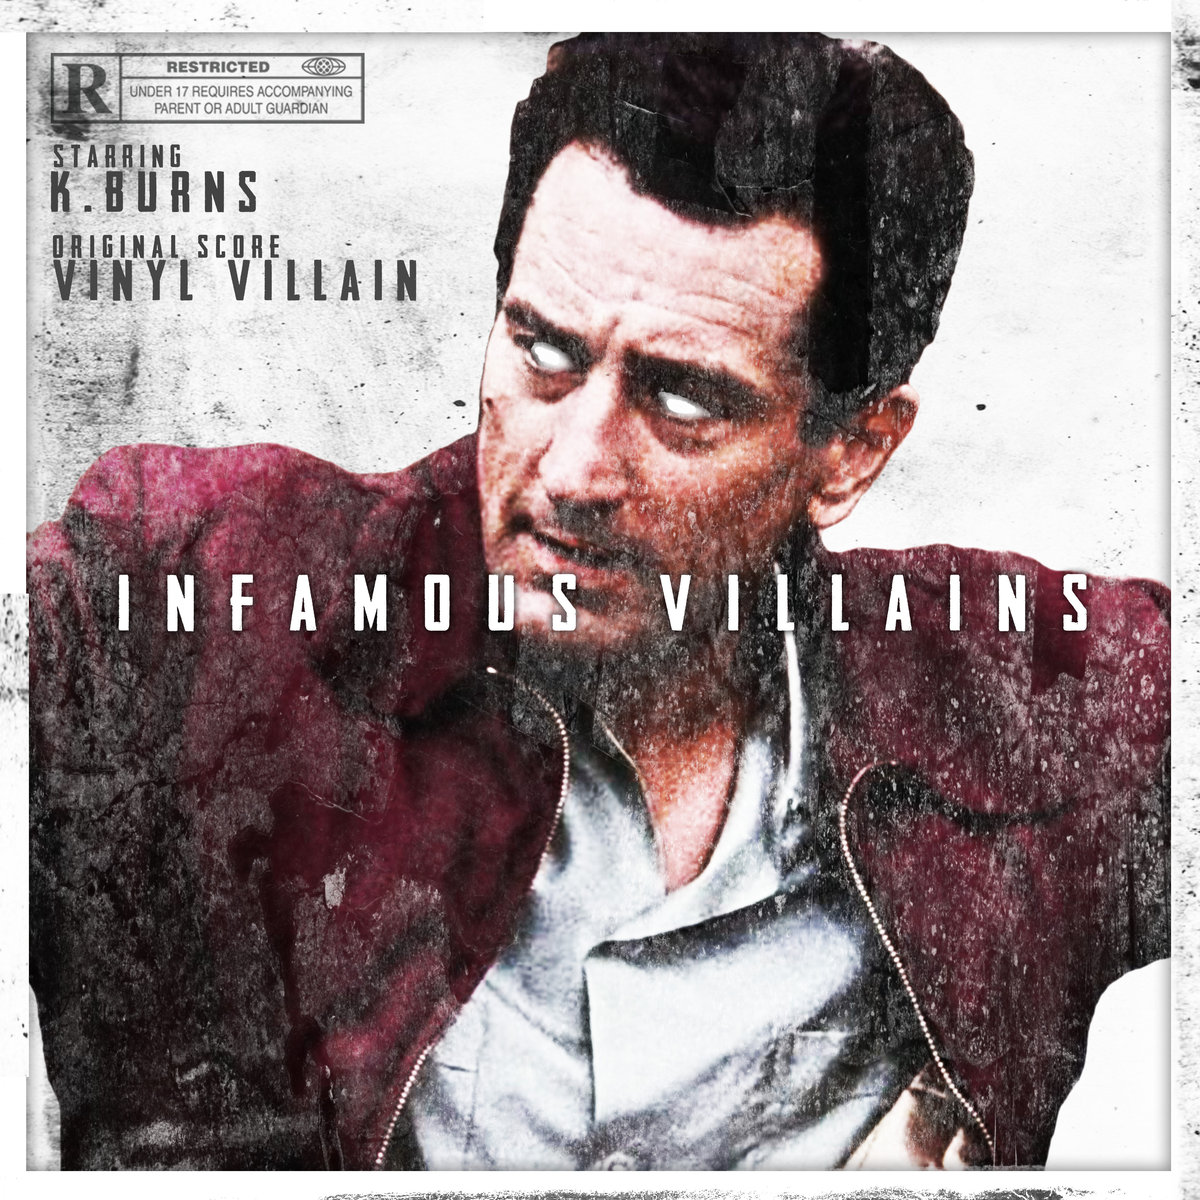 K.burns__vinyl_villain_-_infamous_villains